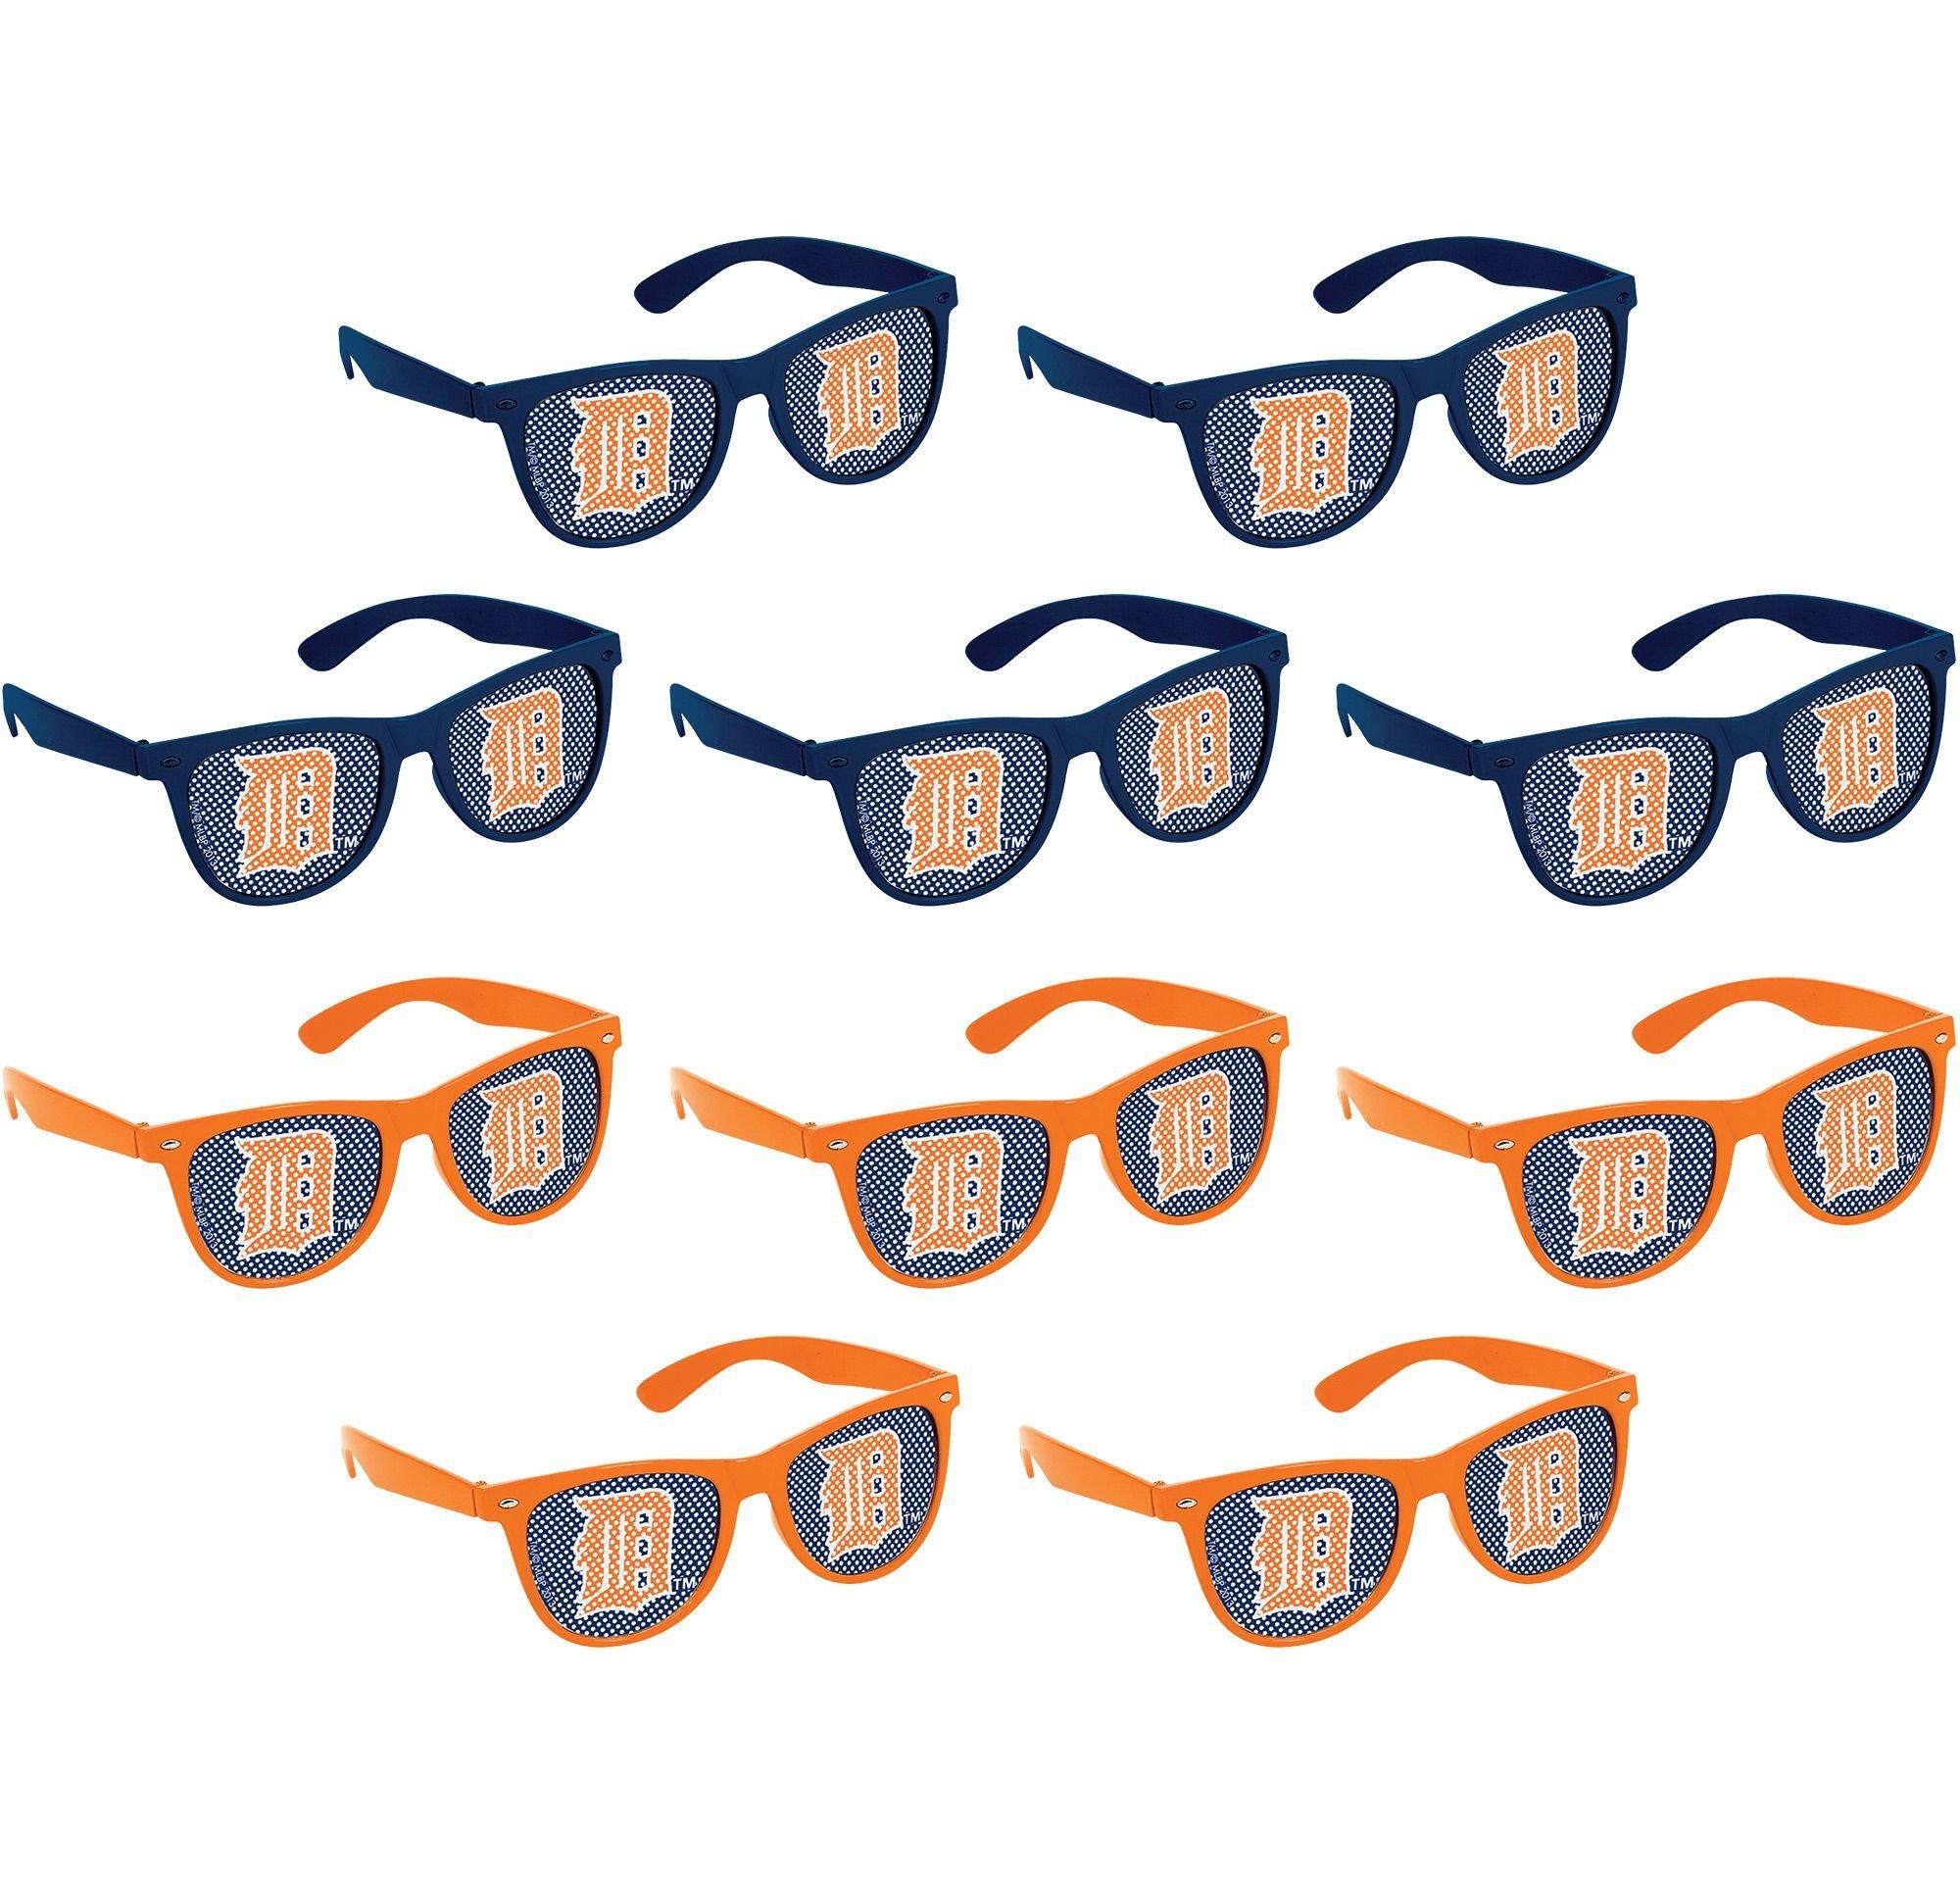 Detroit Tigers Printed Glasses 10ct